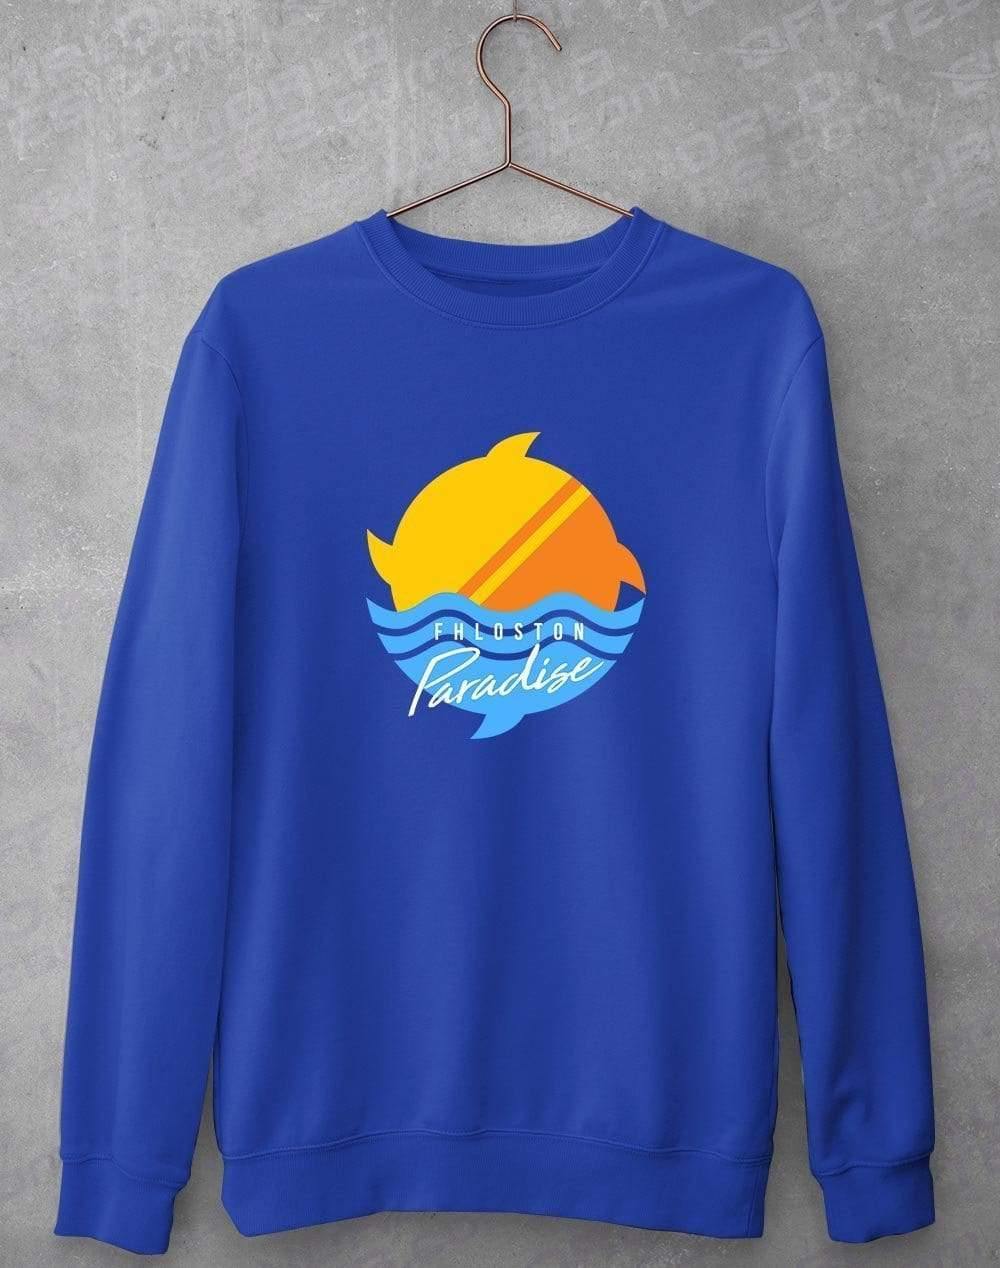 Fhloston Paradise Classic Sweatshirt S / Royal Blue  - Off World Tees